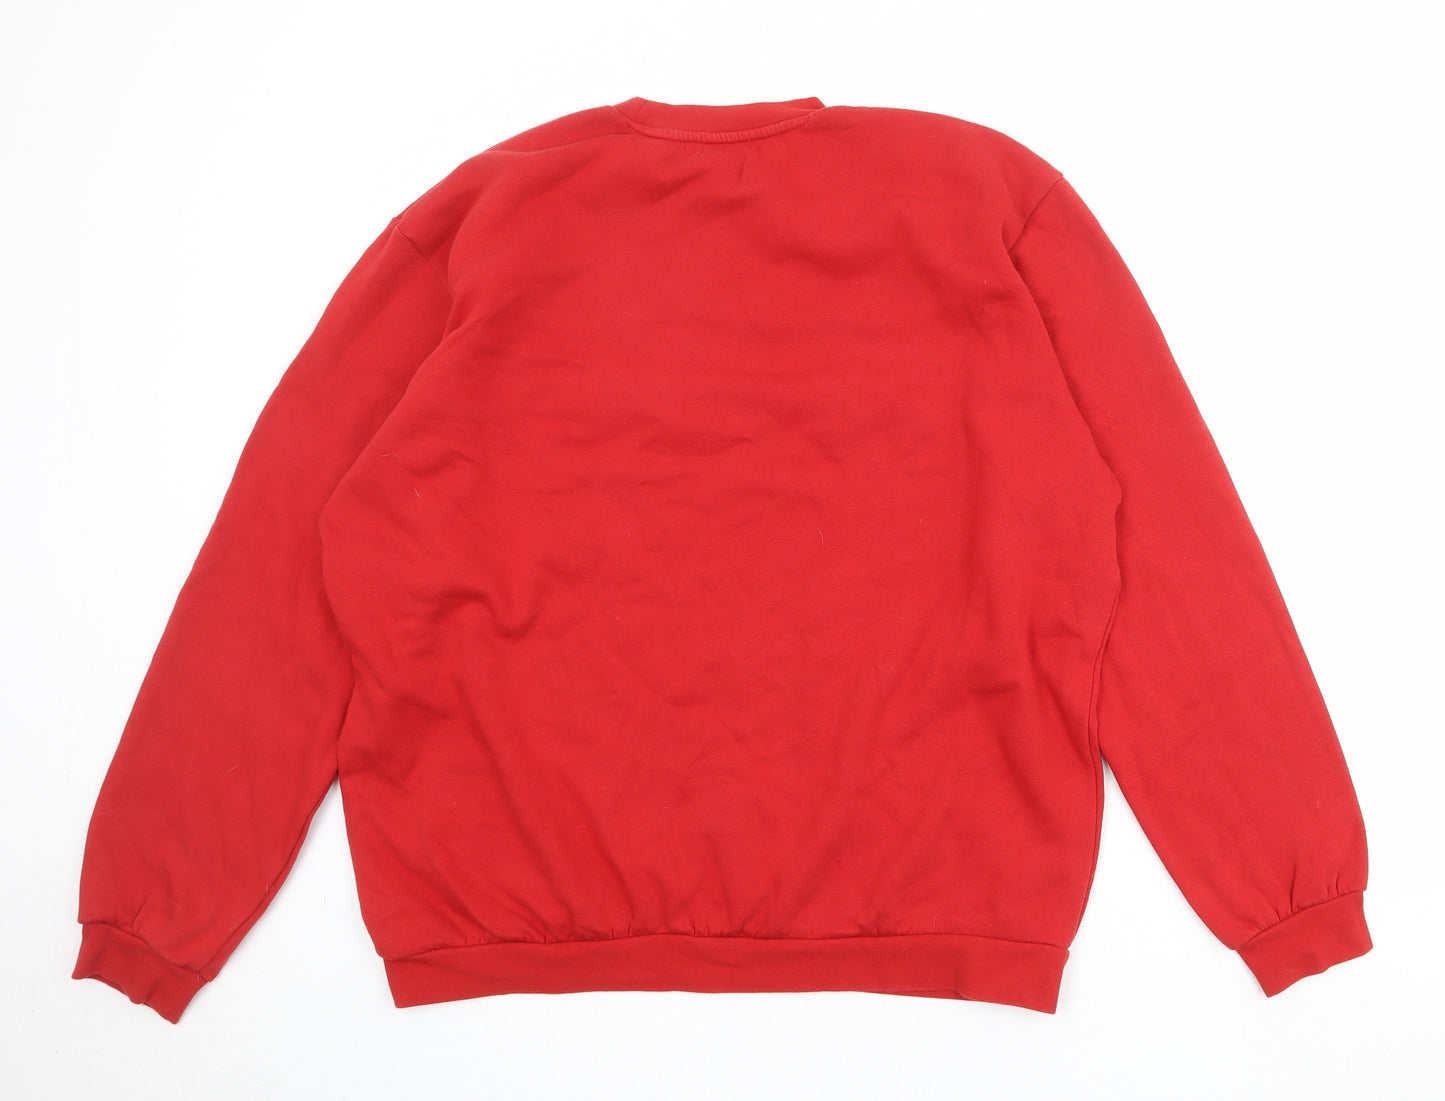 adidas Mens Red Cotton Pullover Sweatshirt Size XL - England Hockey